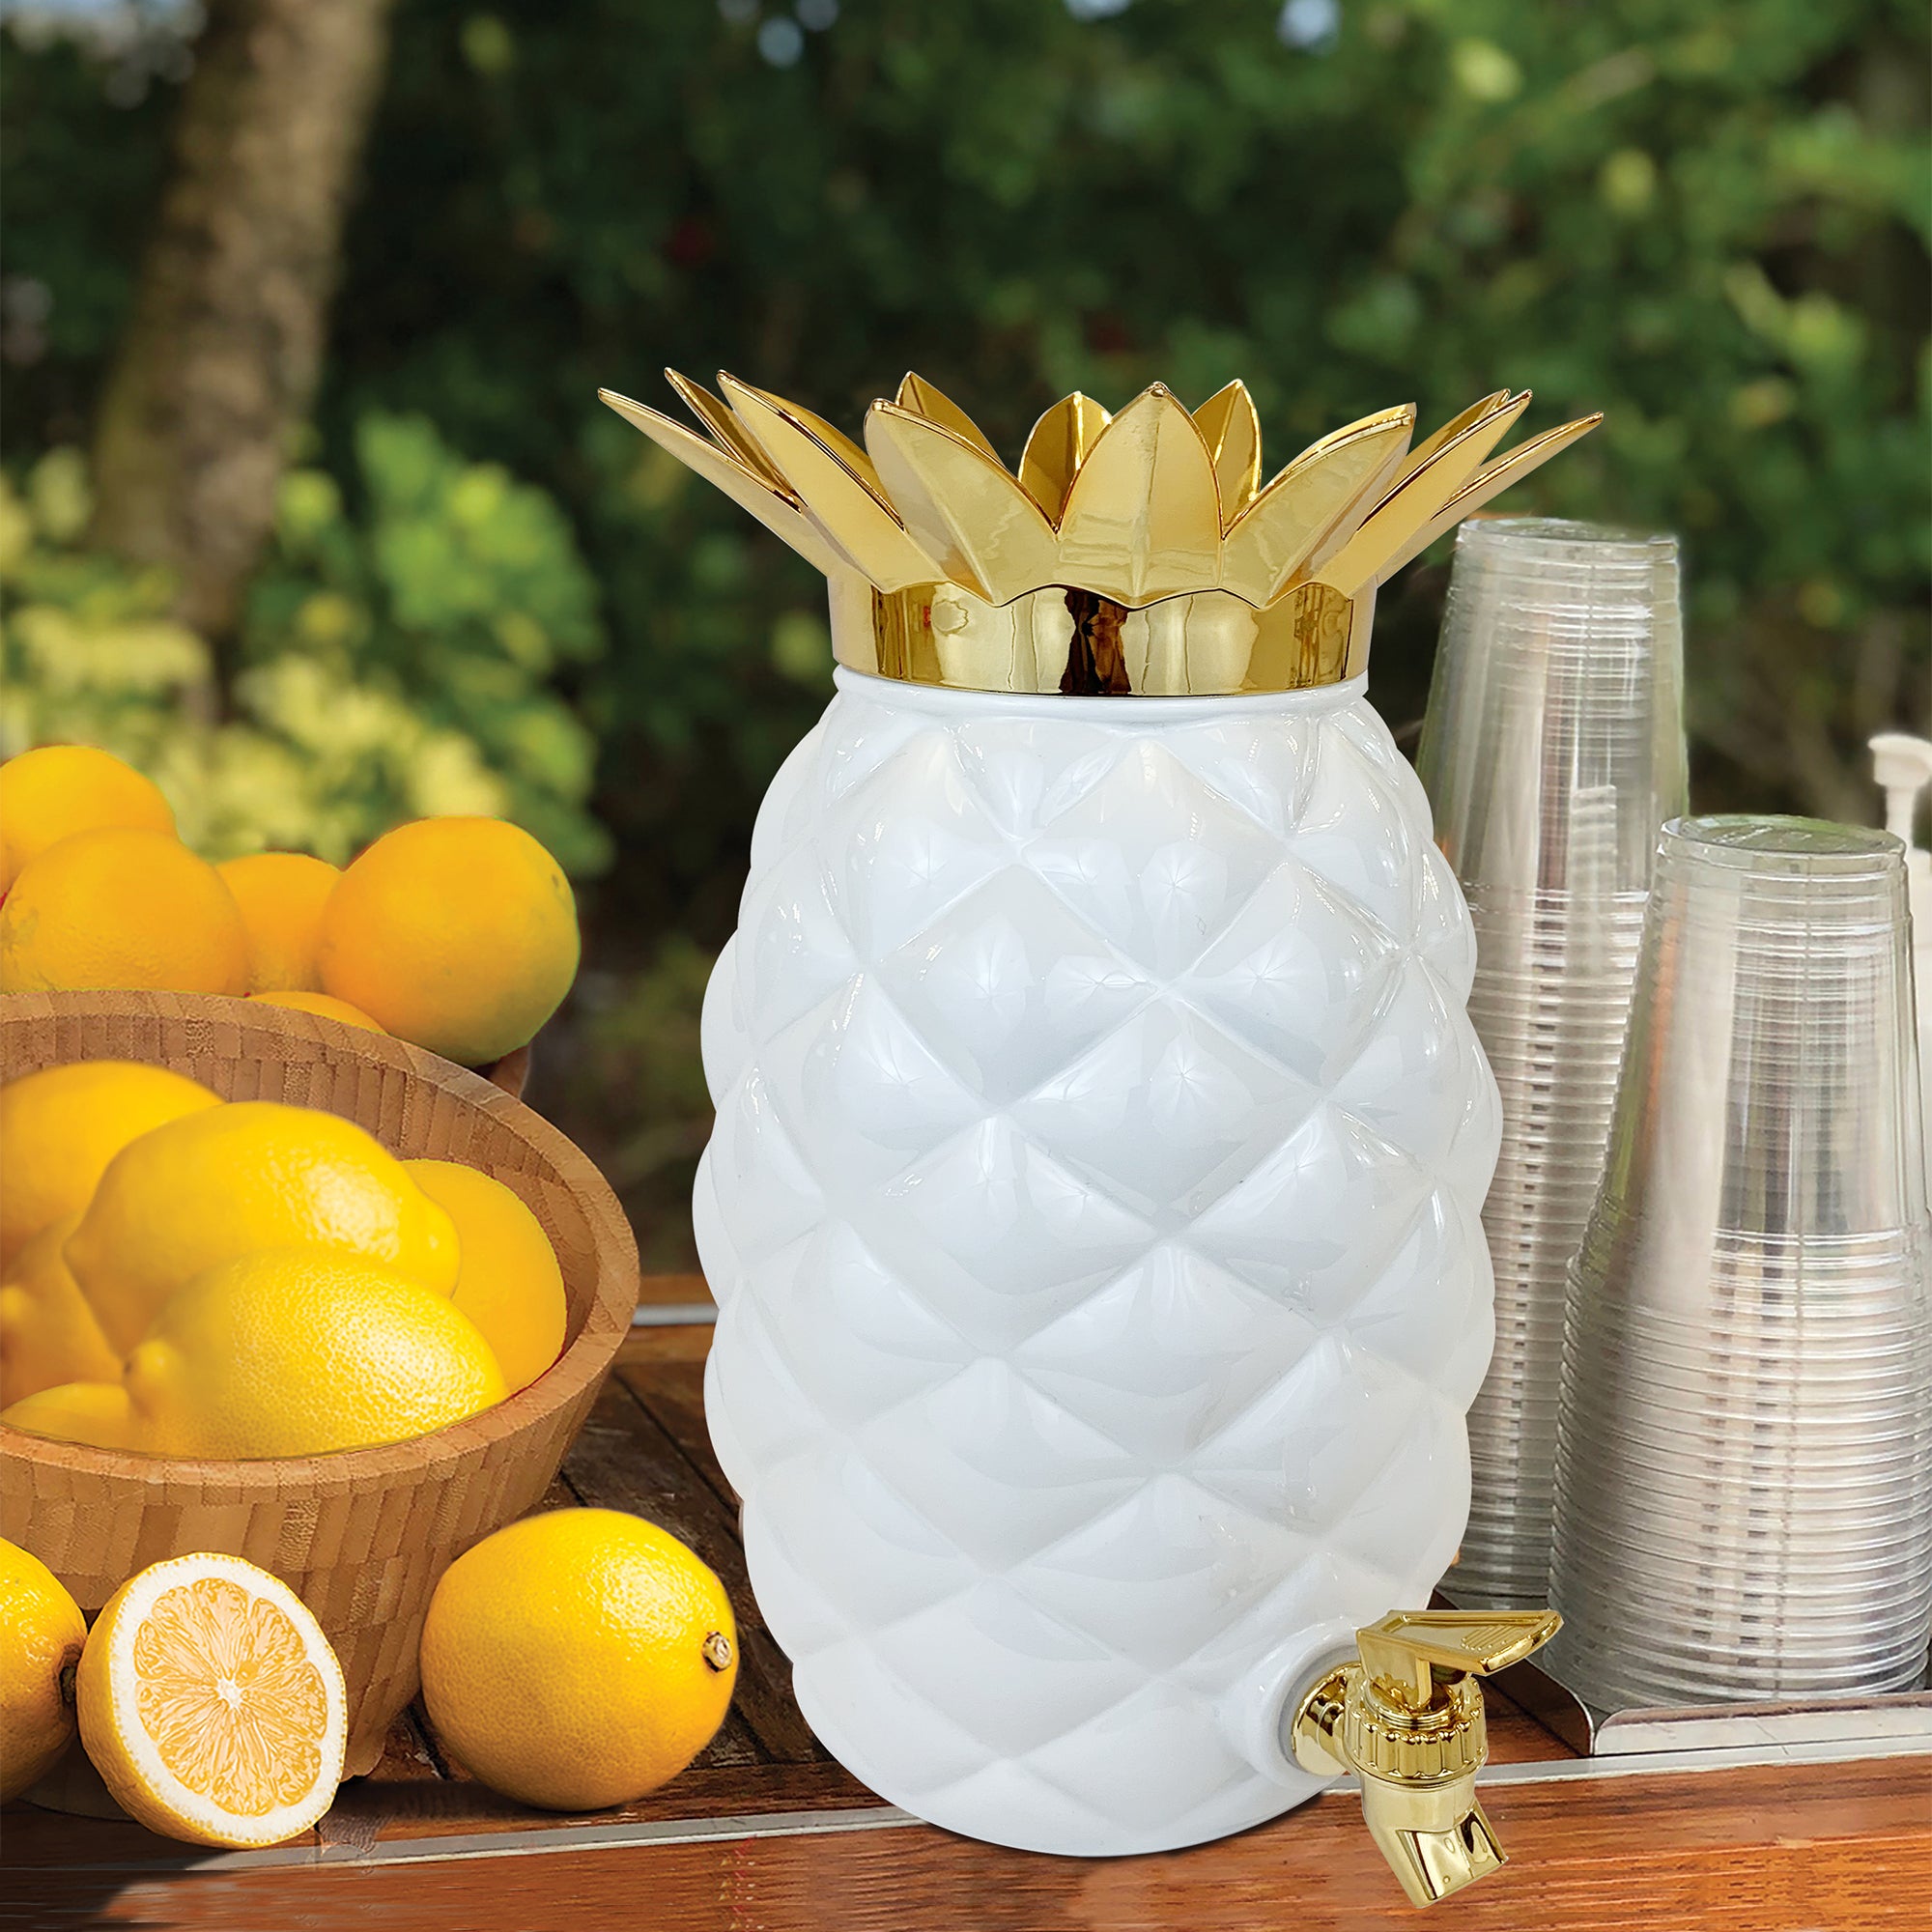 Plastic Pineapple Drink Dispenser Party Pack